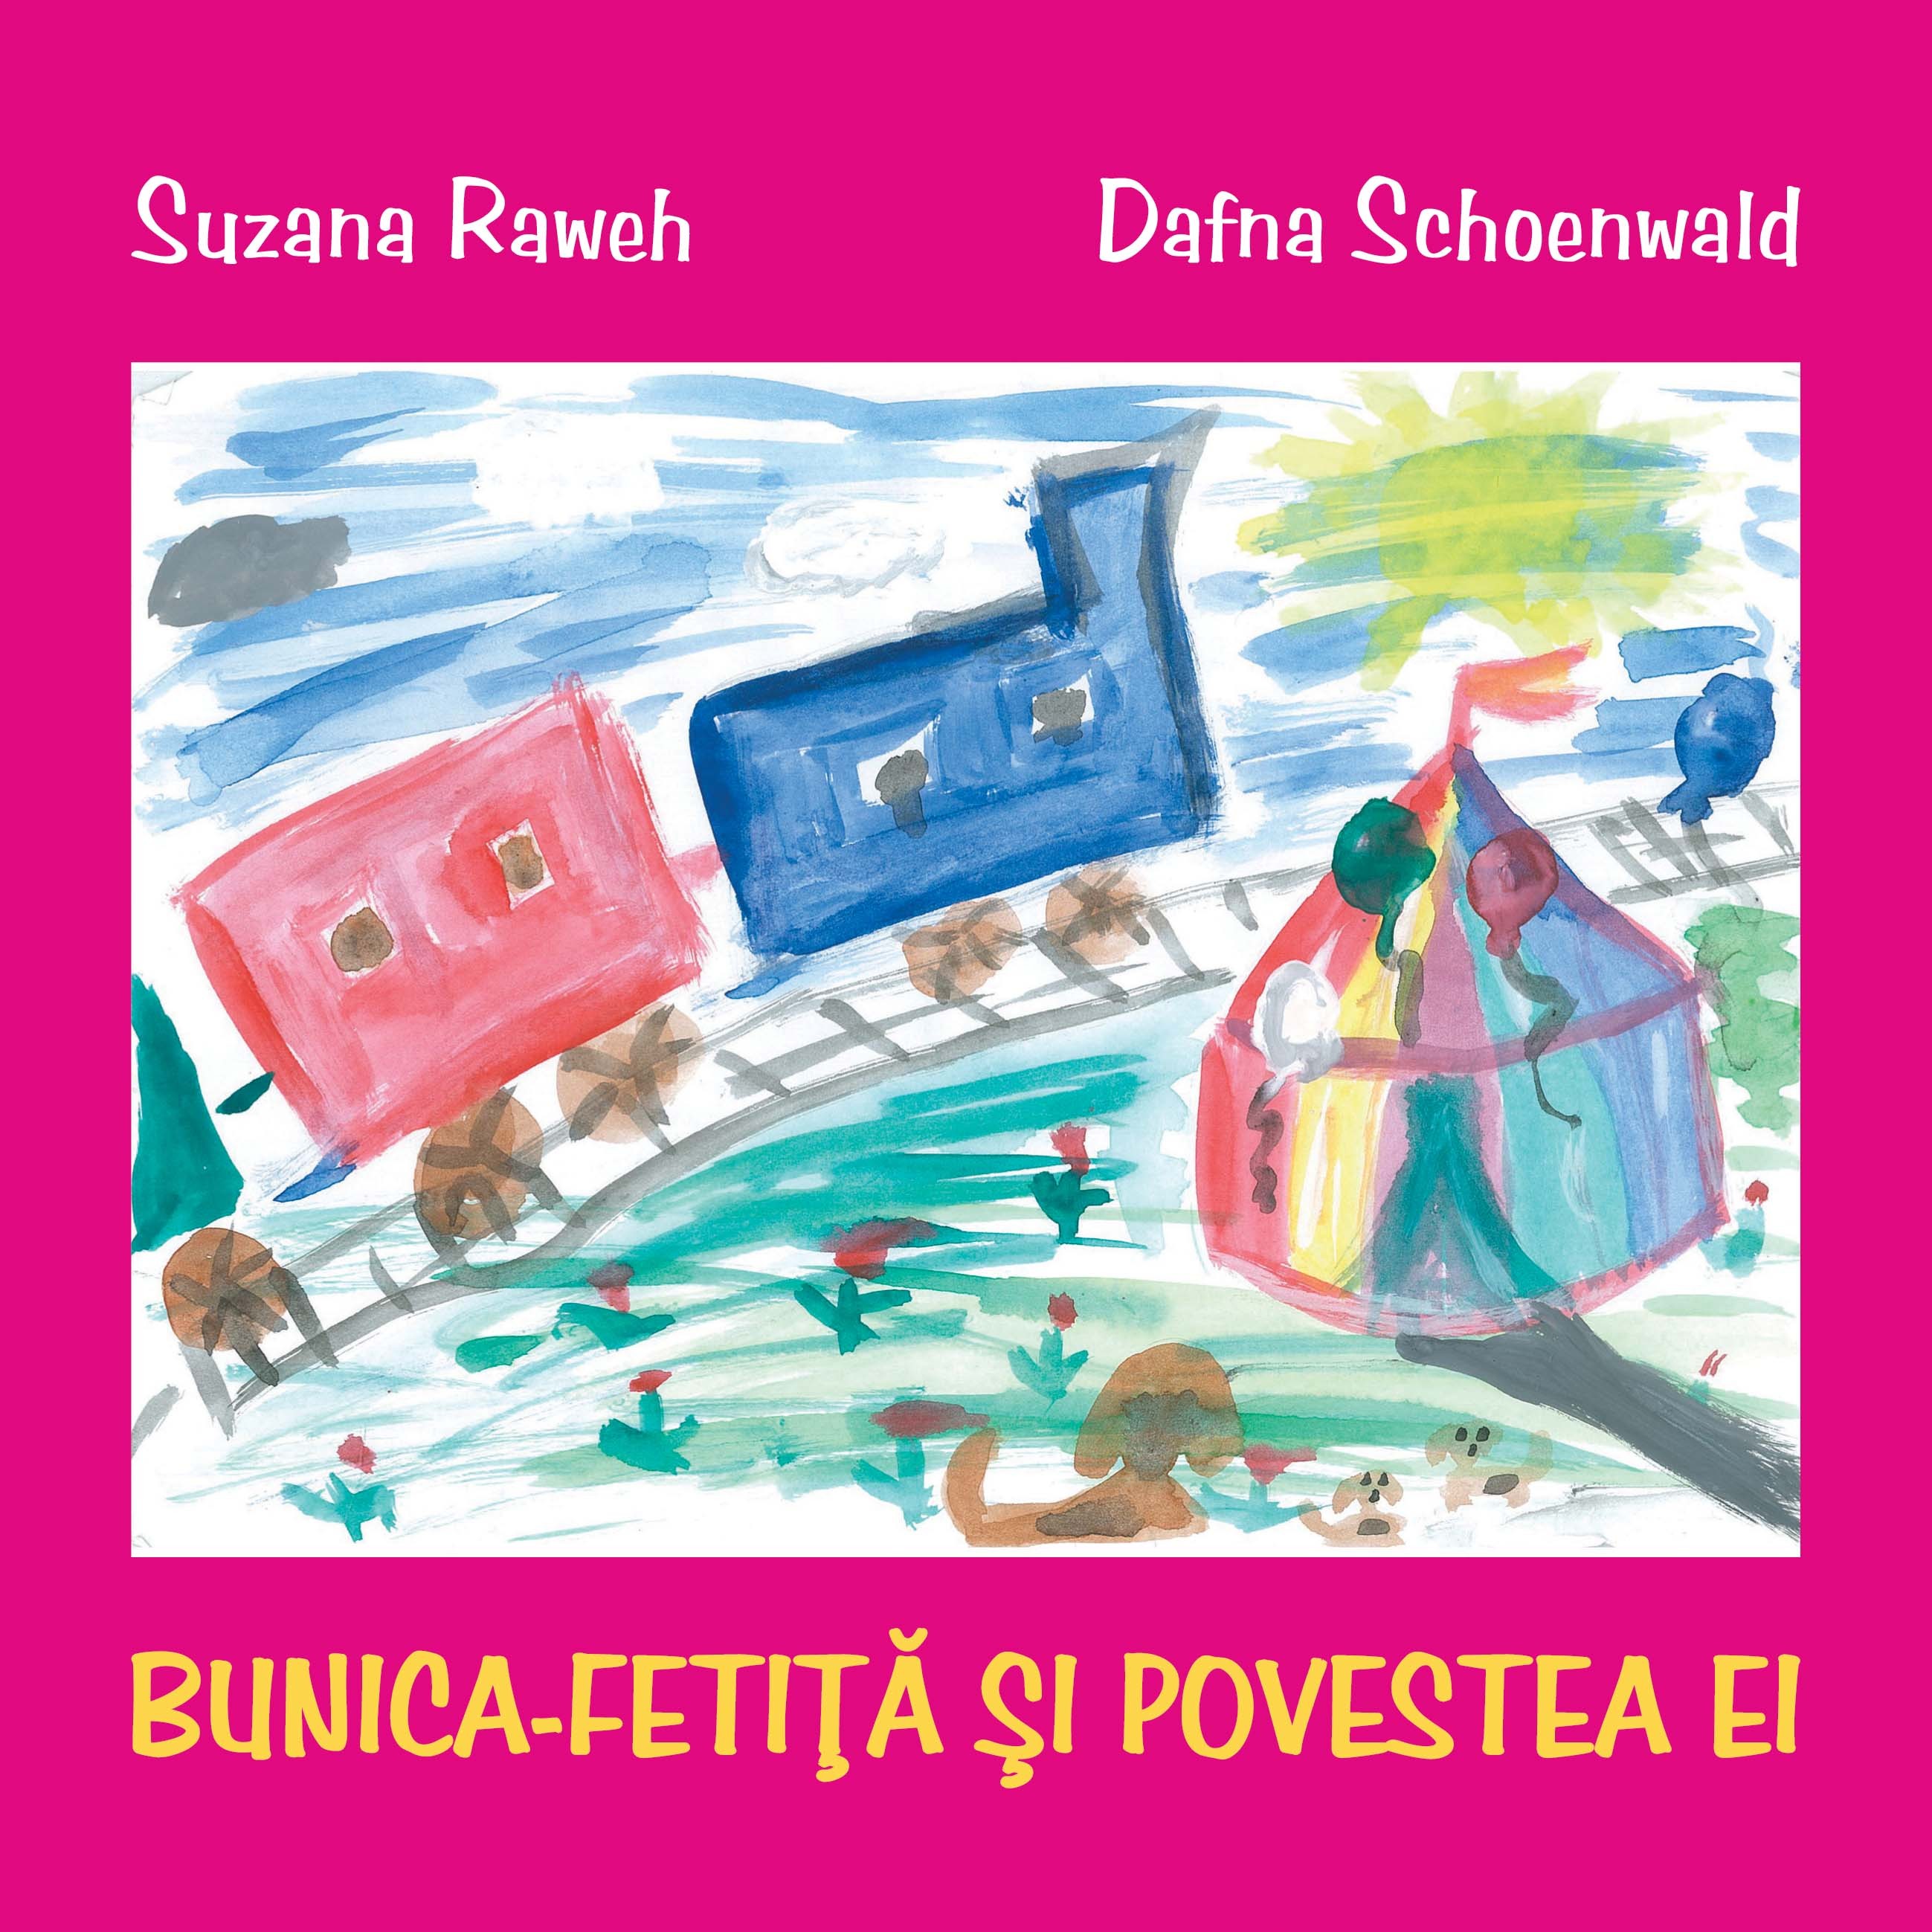 Bunica-Fetita si povestea ei - Suzana Raweh, Dafna Schoenwald